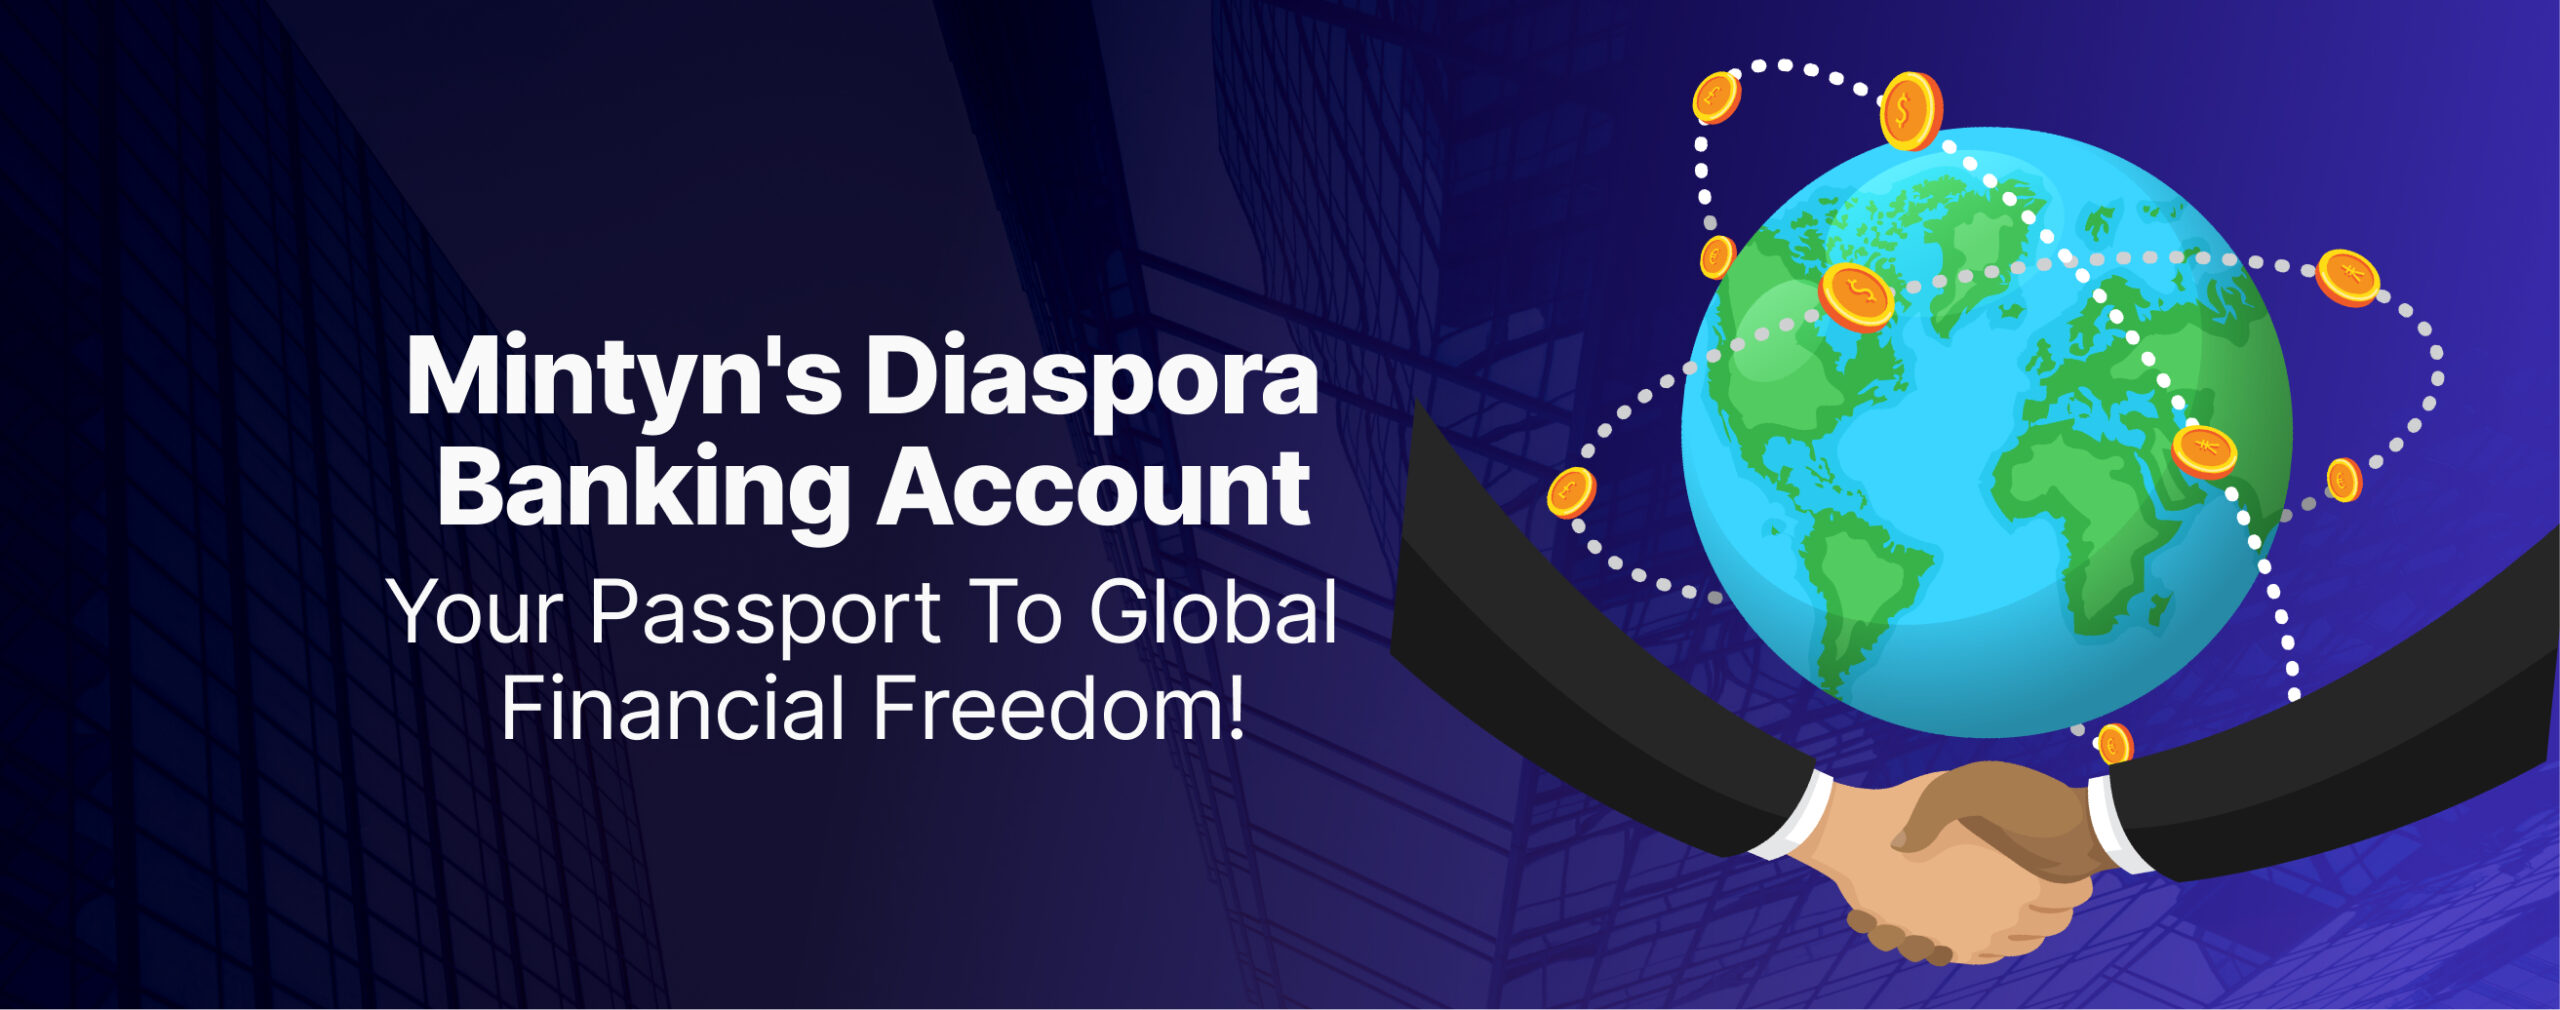 Disapora Banking Account